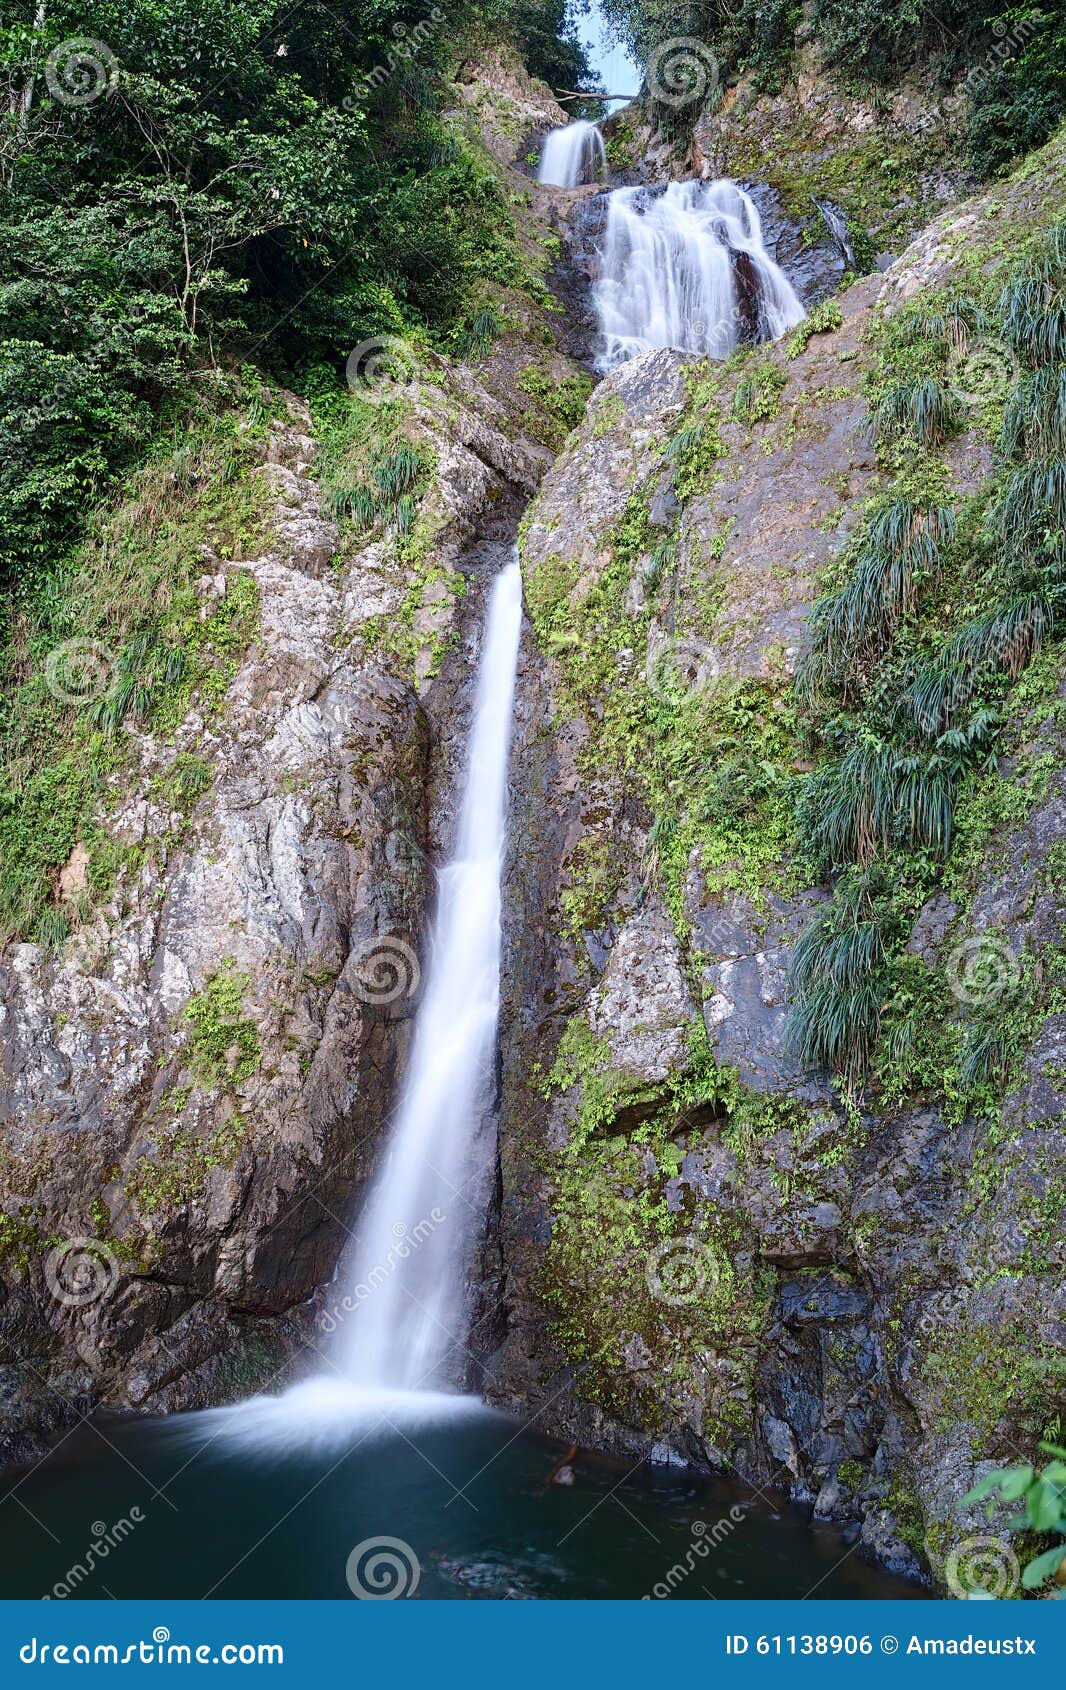 salto de dona juana waterfall, orocovis, puerto rico